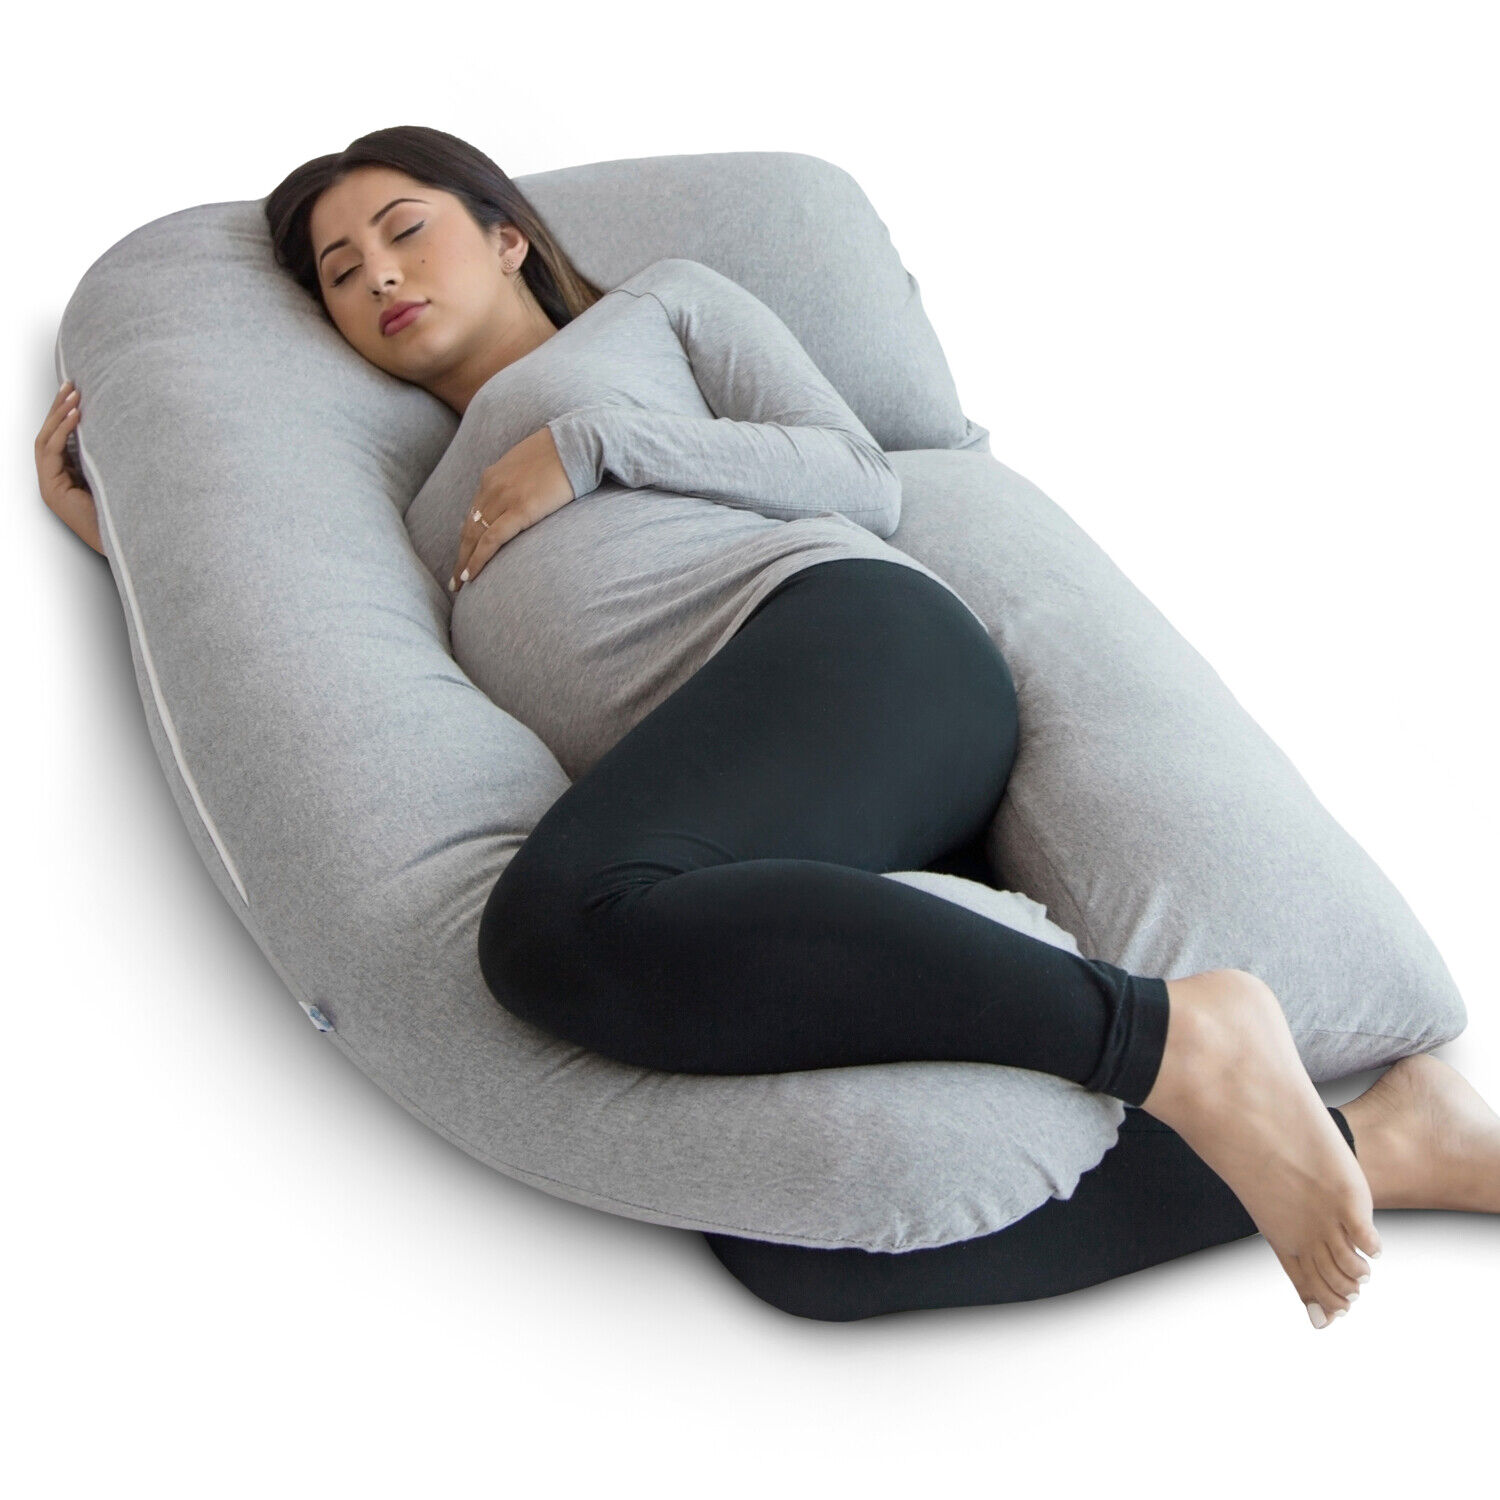 U-Shaped Full Body Pregnancy Pillow by PharMeDoc